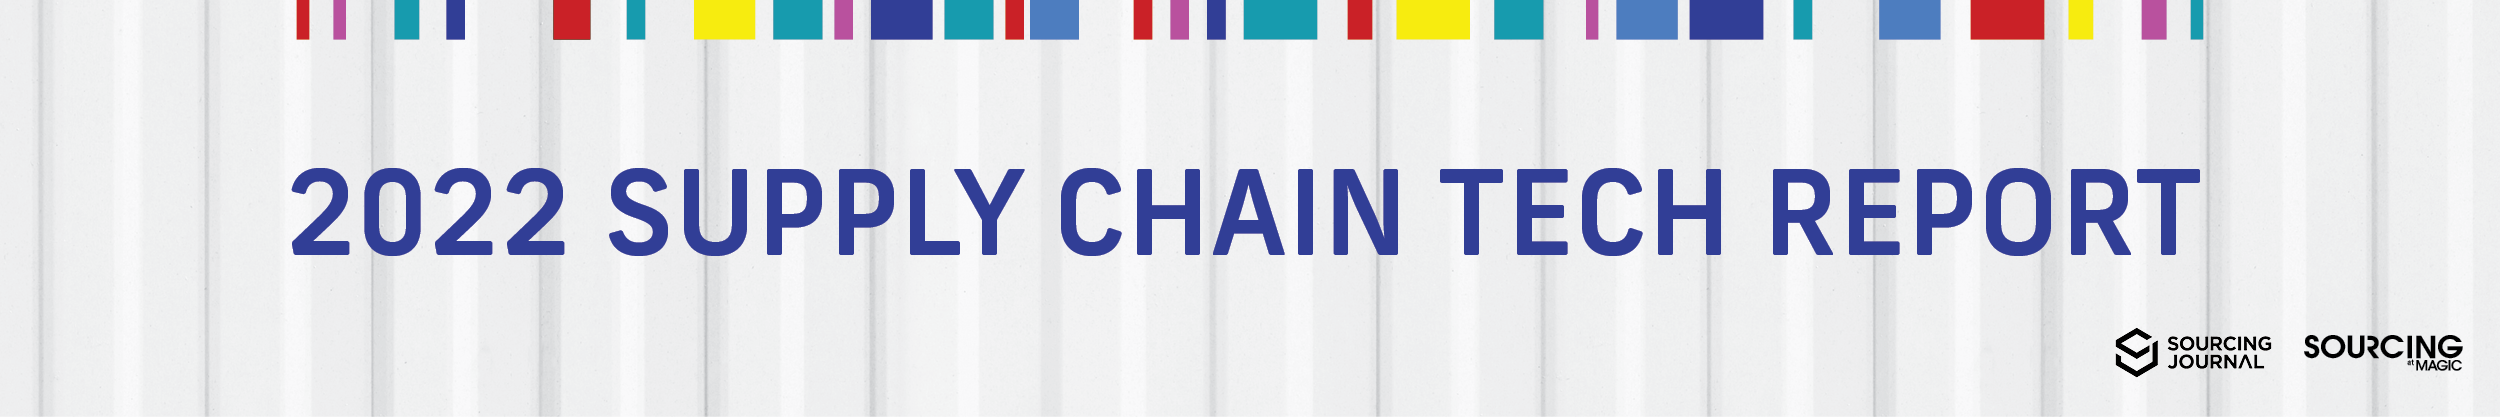 2022 Supply Chain Tech Report 